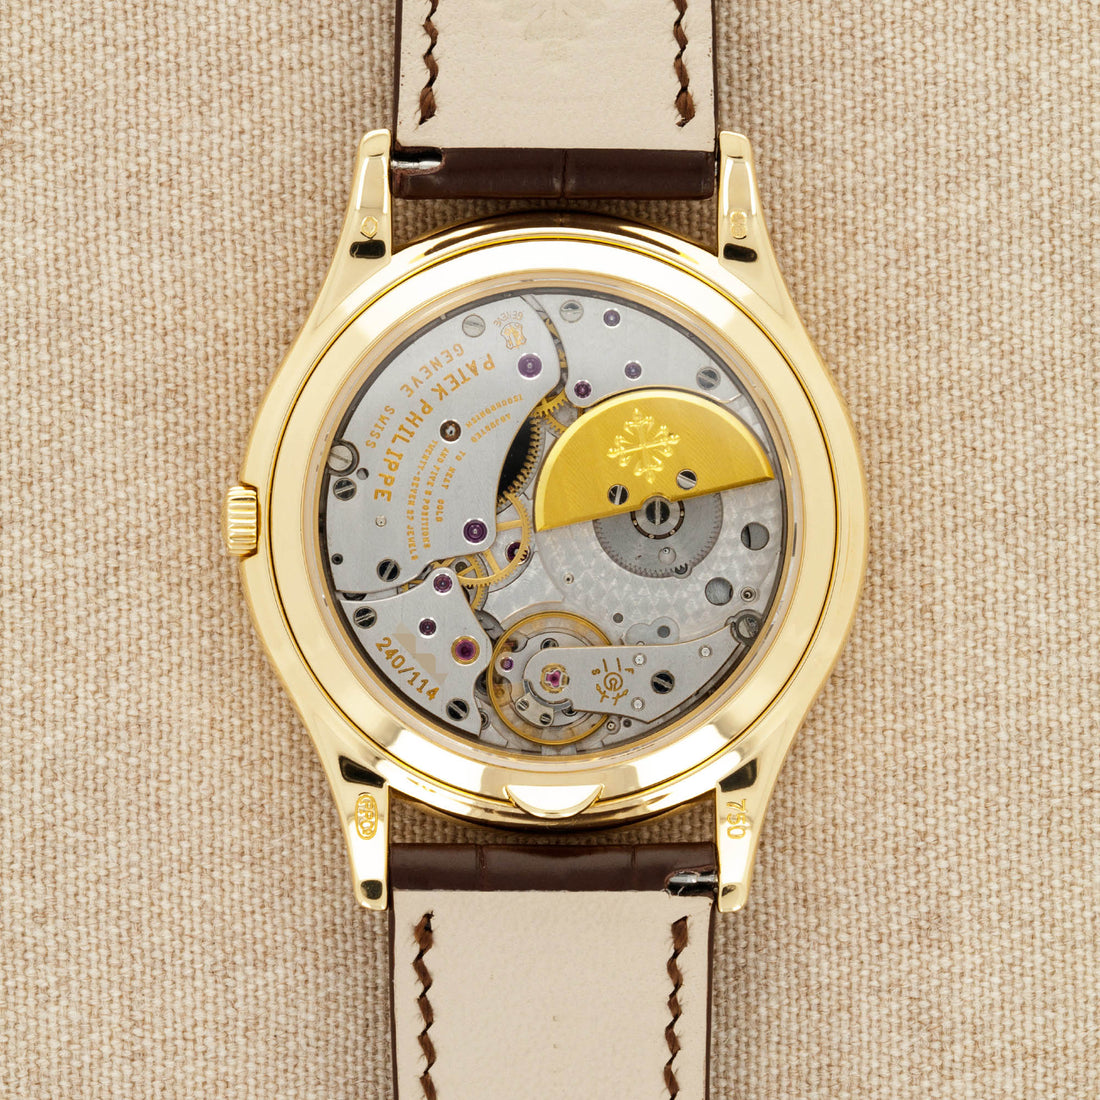 Patek Philippe Yellow Gold Perpetual Calendar Watch Ref. 5140